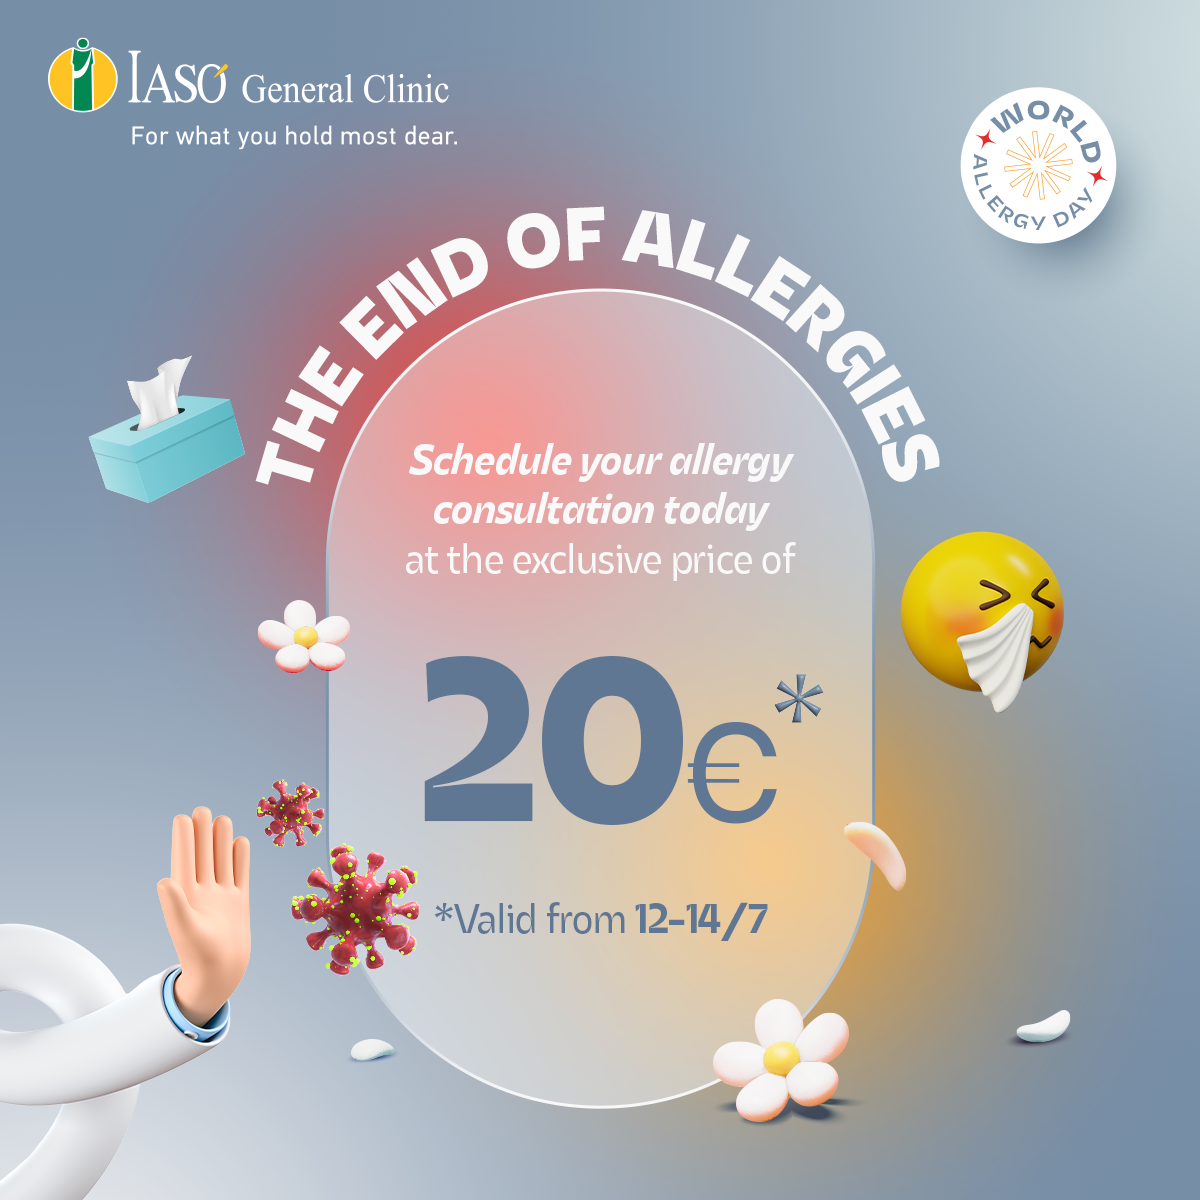 IASO General Clinic: World Allergy Day –Allergology Department Offer